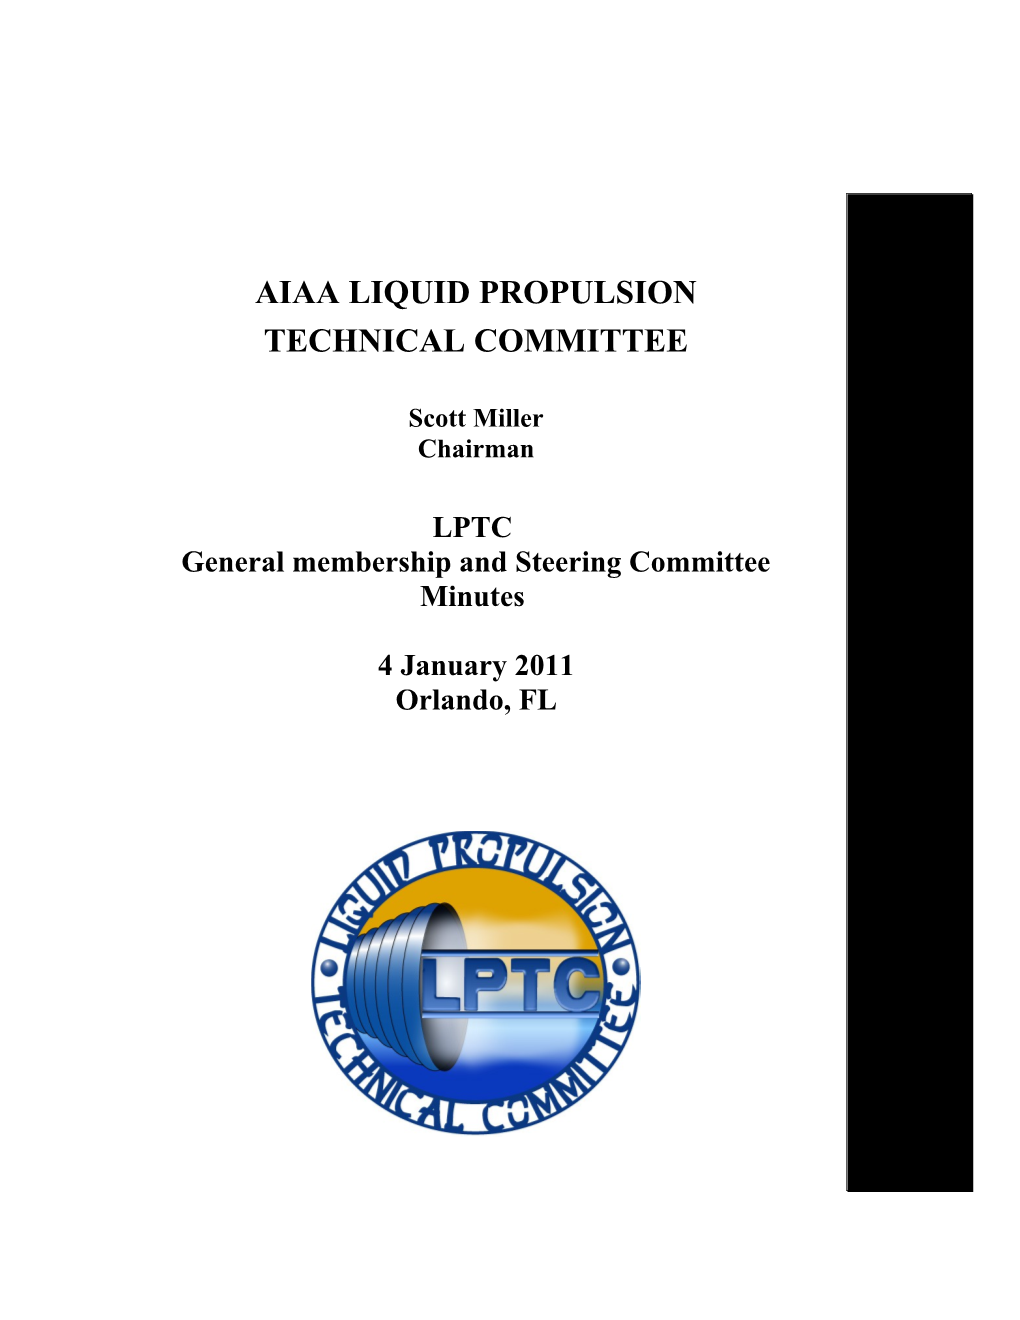 AIAA Liquid Propulsion Technical Committee (LPTC)